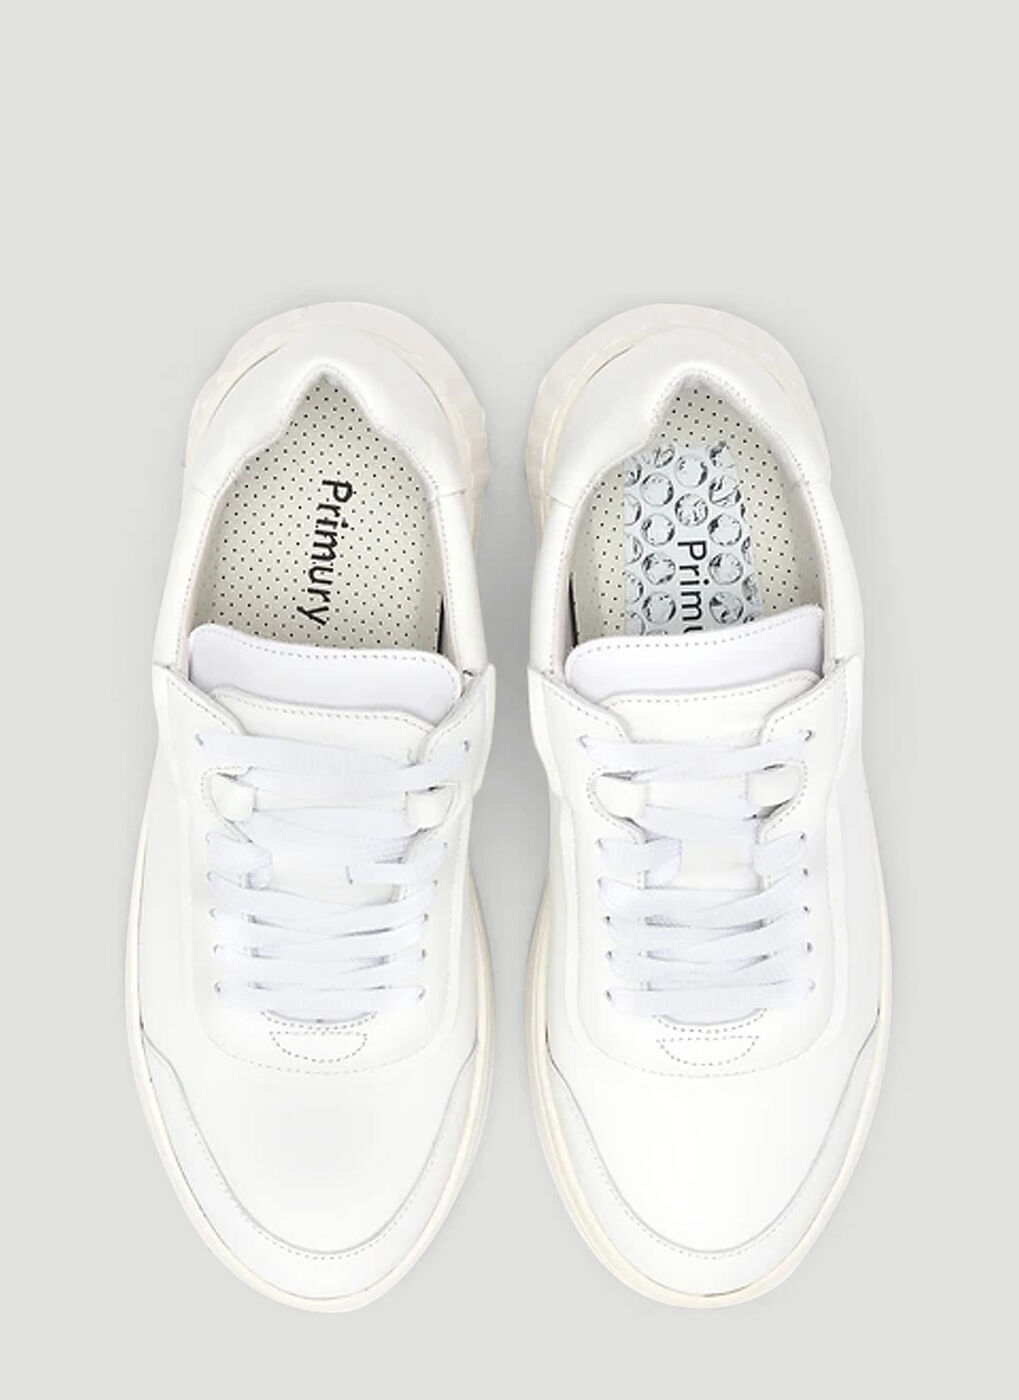 Frank Sneakers in White Primury